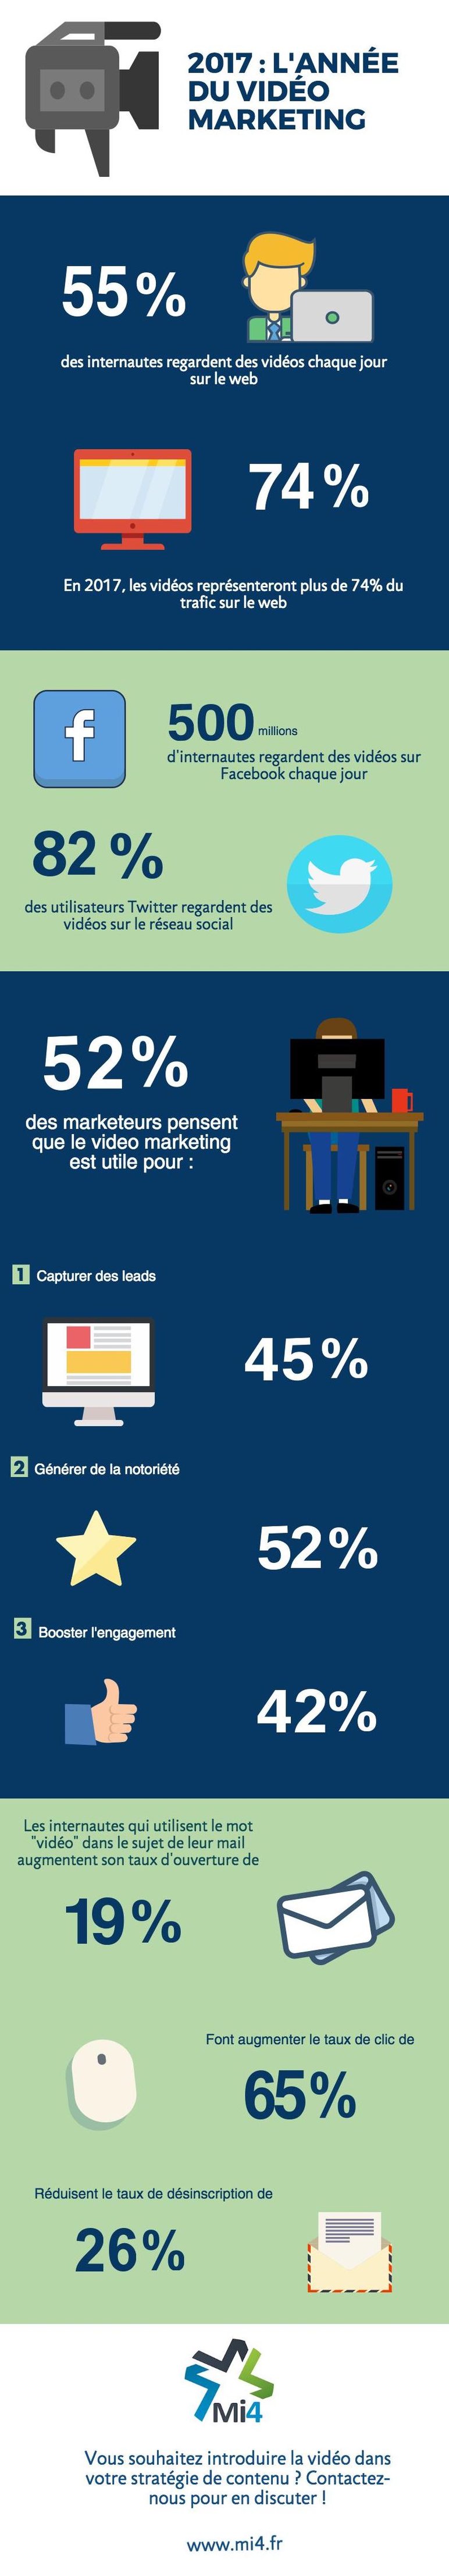 Infographie vidéo marketing 2017